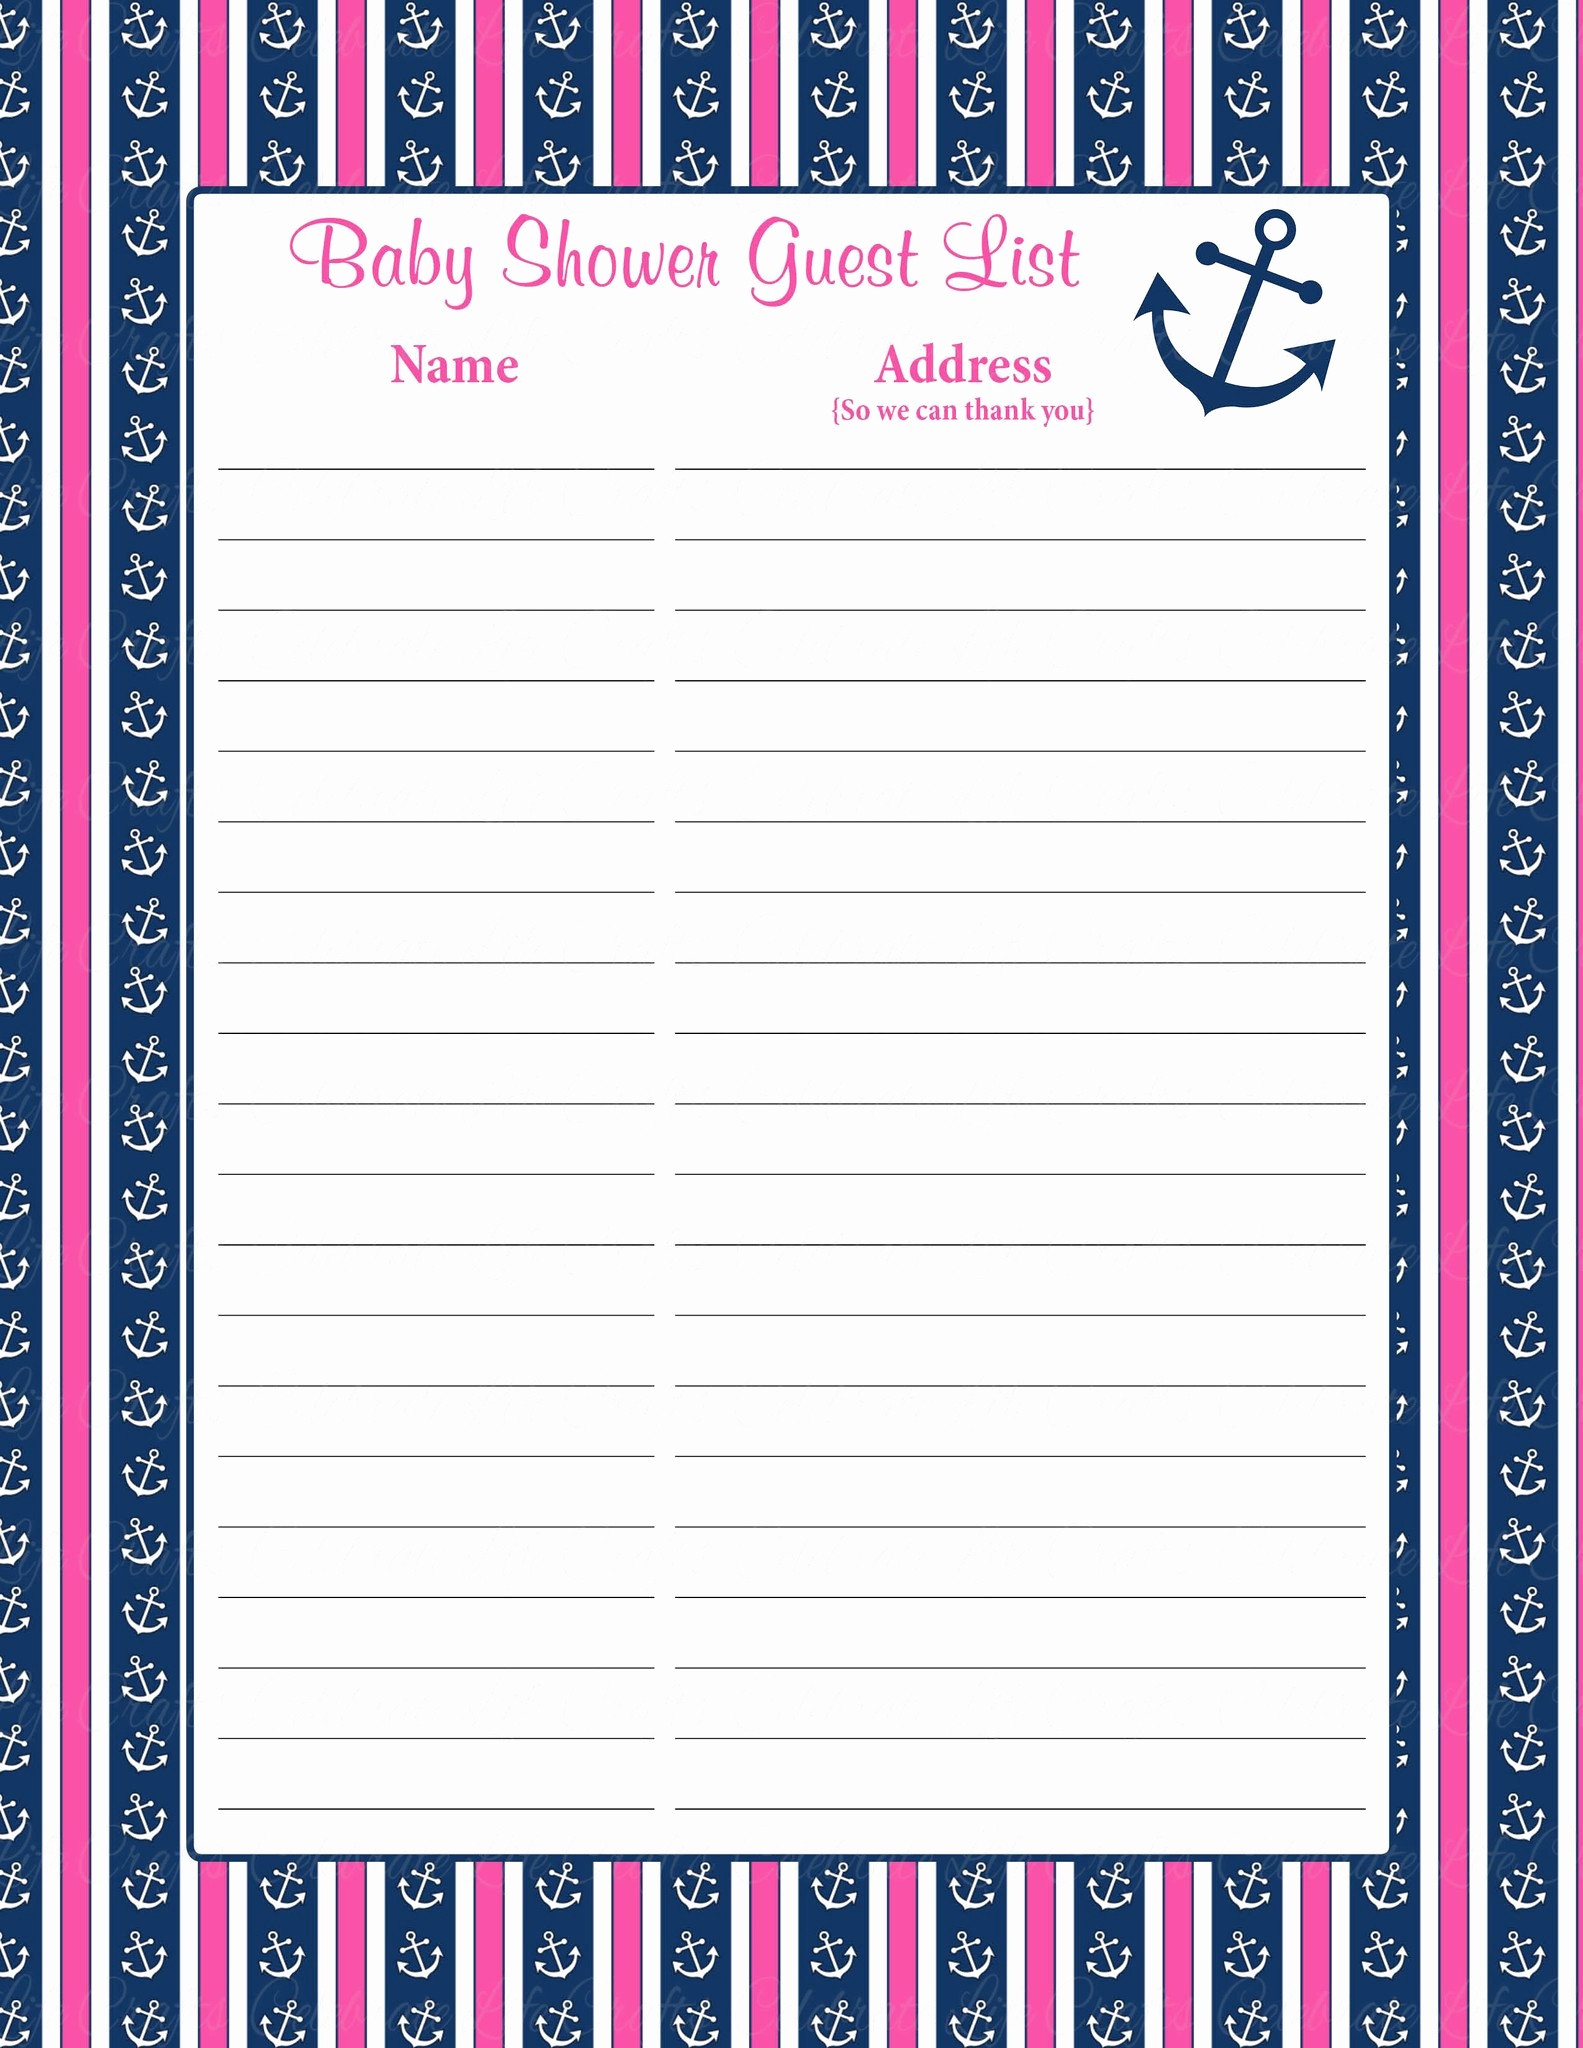 Bridal Shower Gift List Sheet Lovely Printable Baby Shower Guest List Portablegasgrillweber